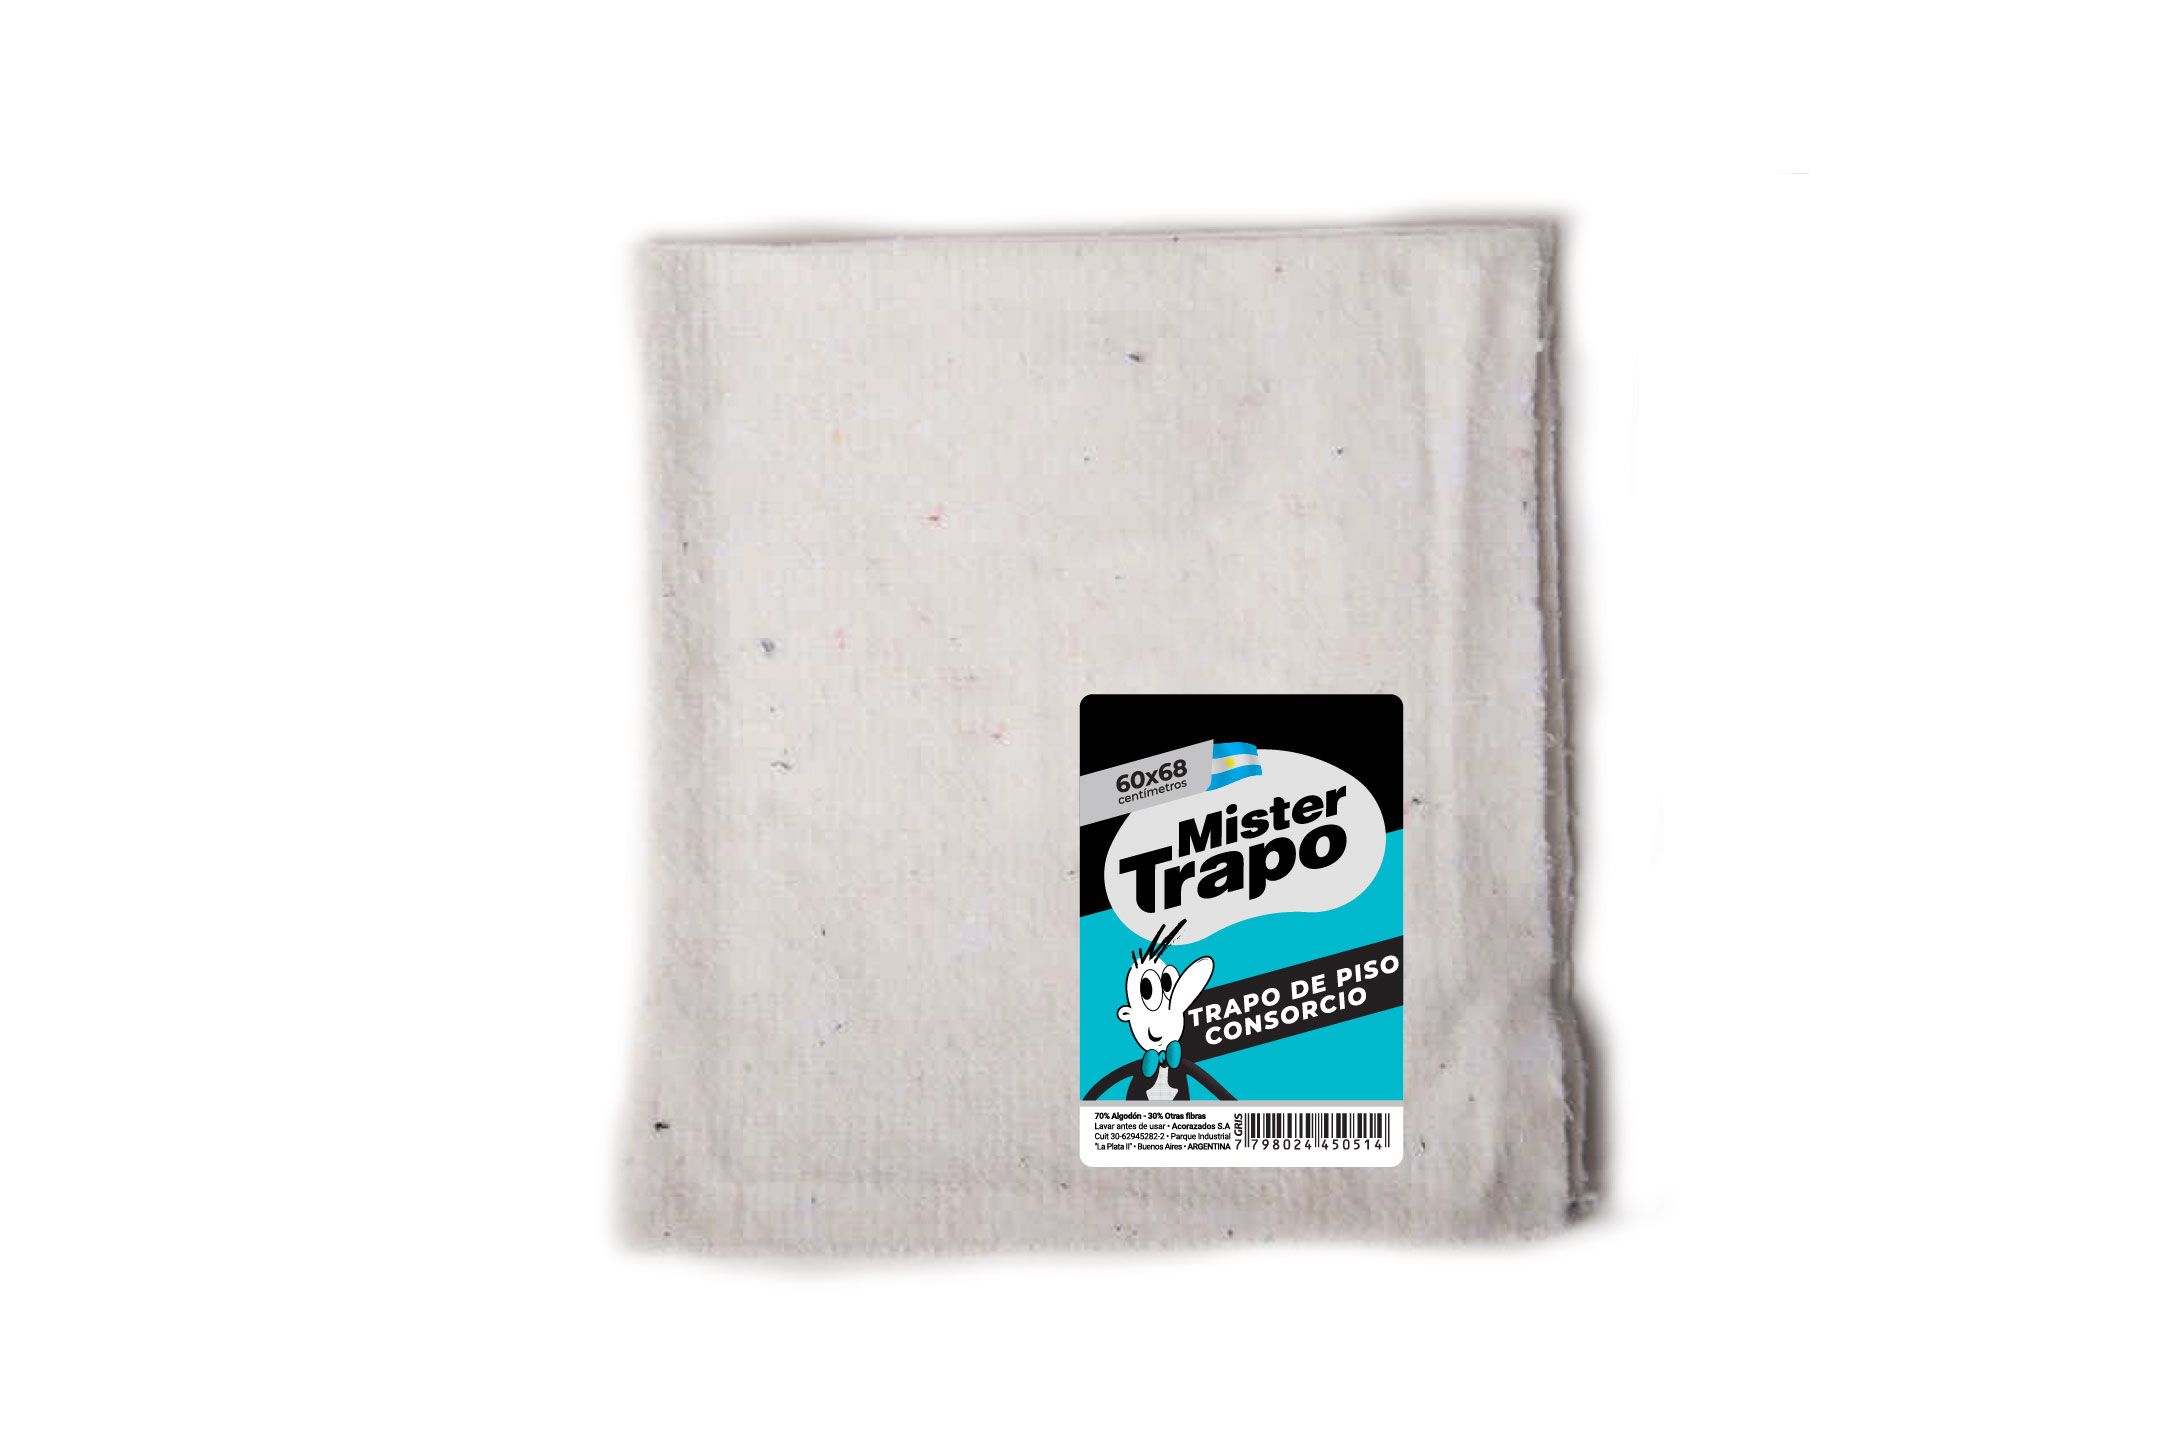 TRAPO BLANCO MISTER TRAPO60x68